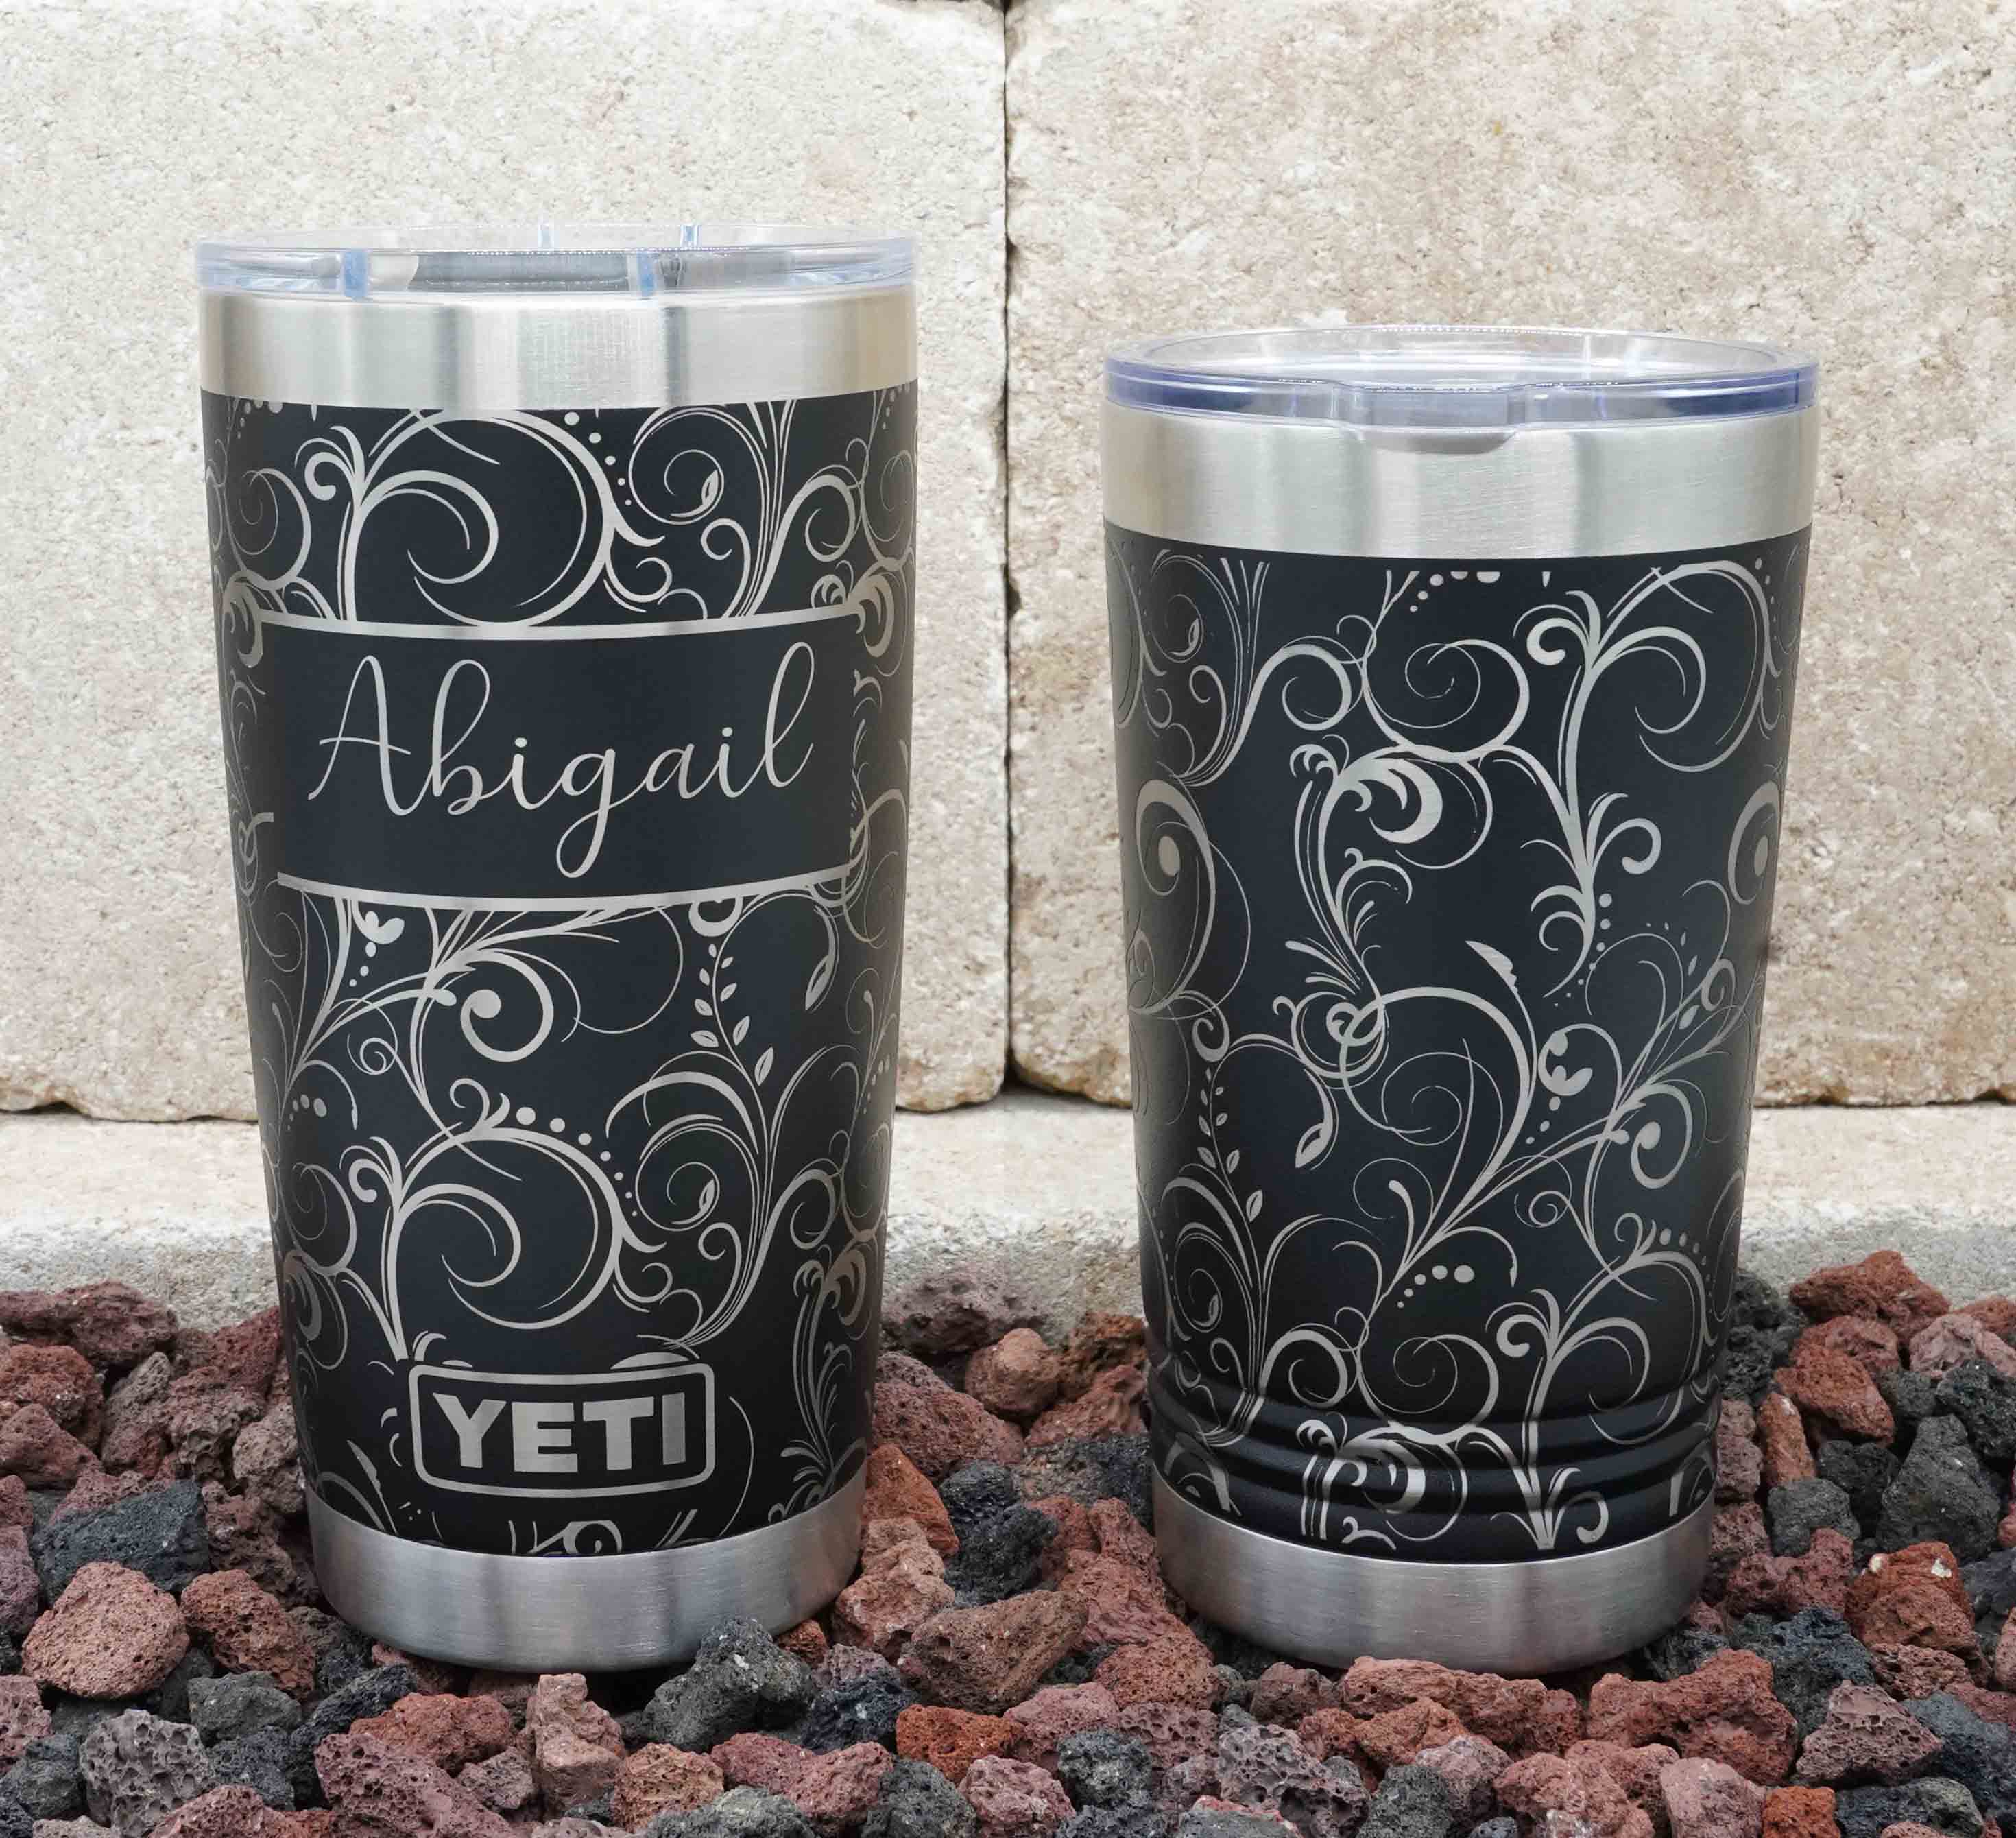 Laser Engraved YETI® or Polar Camel Tumbler with Flourish Wrap-Around Design